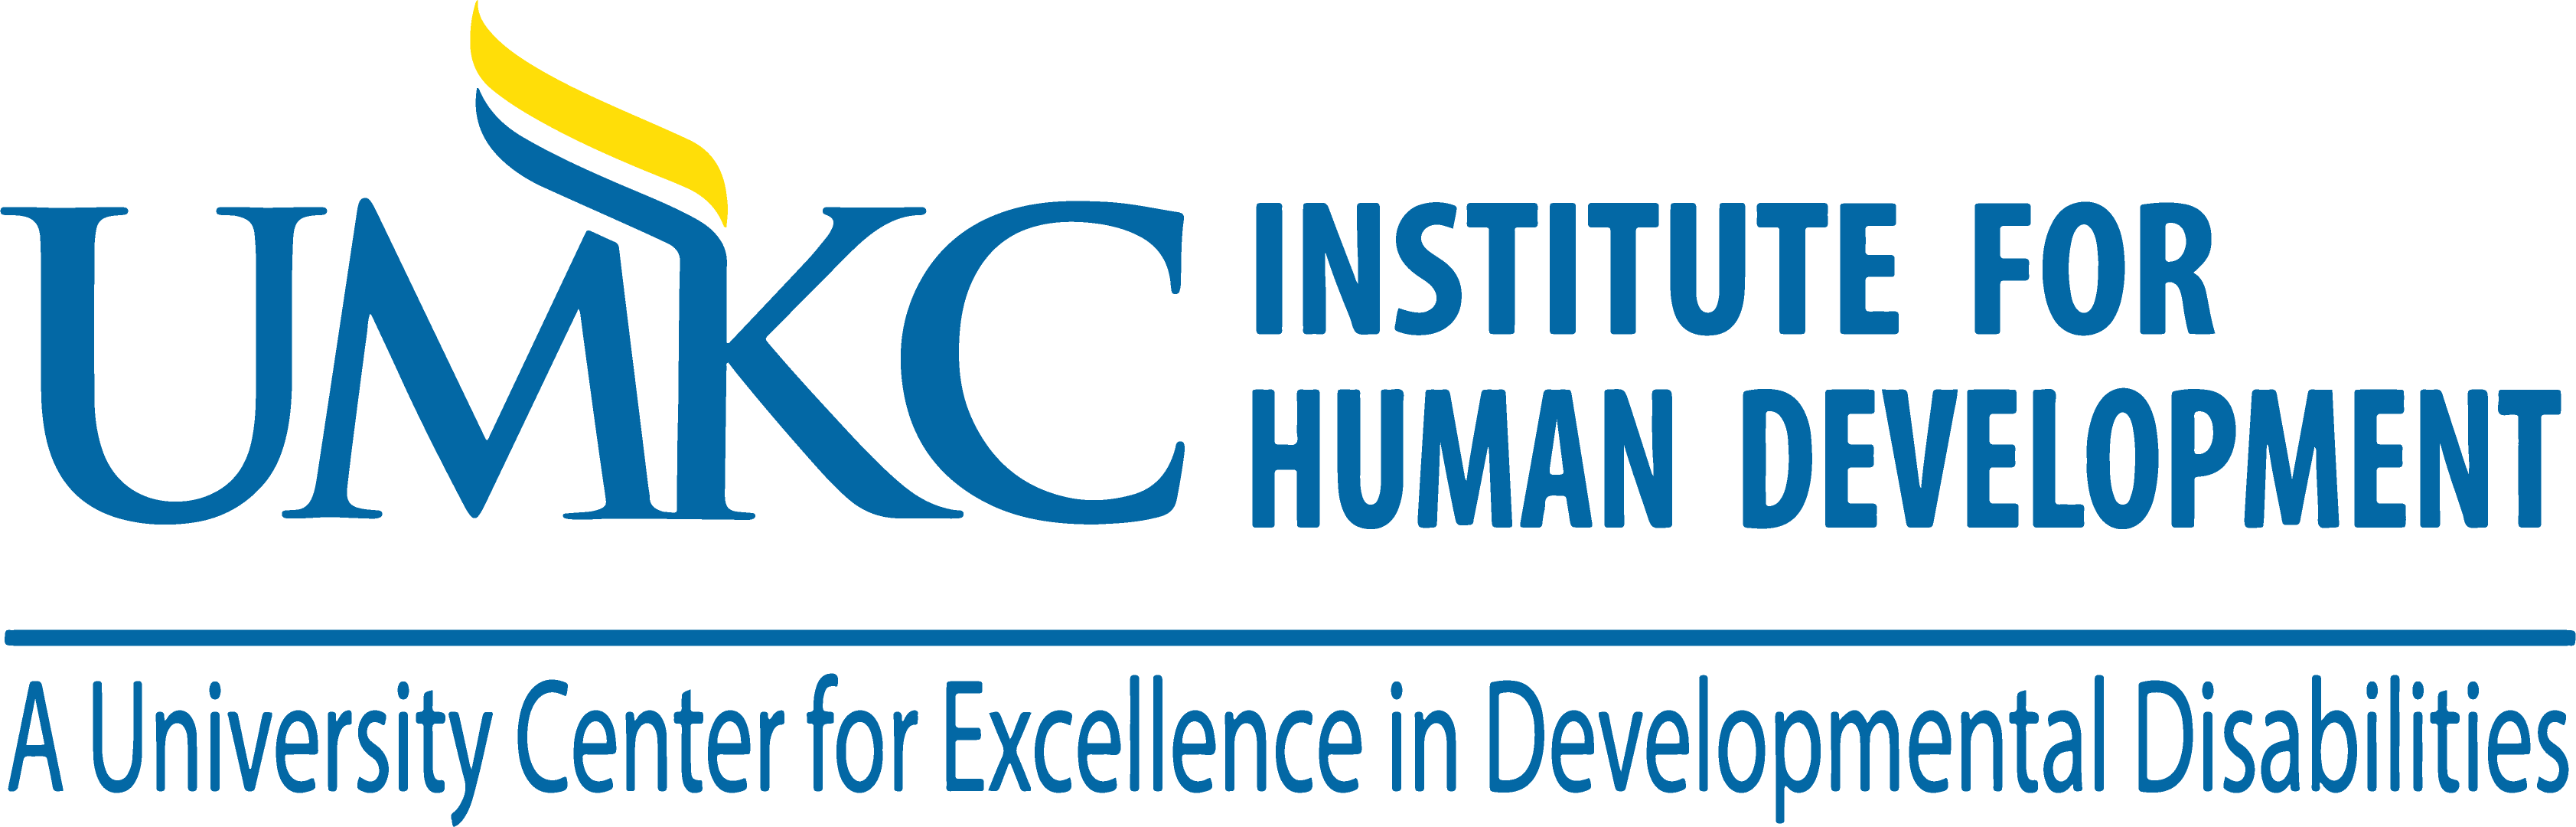 UMKC Institute for Human Development logo